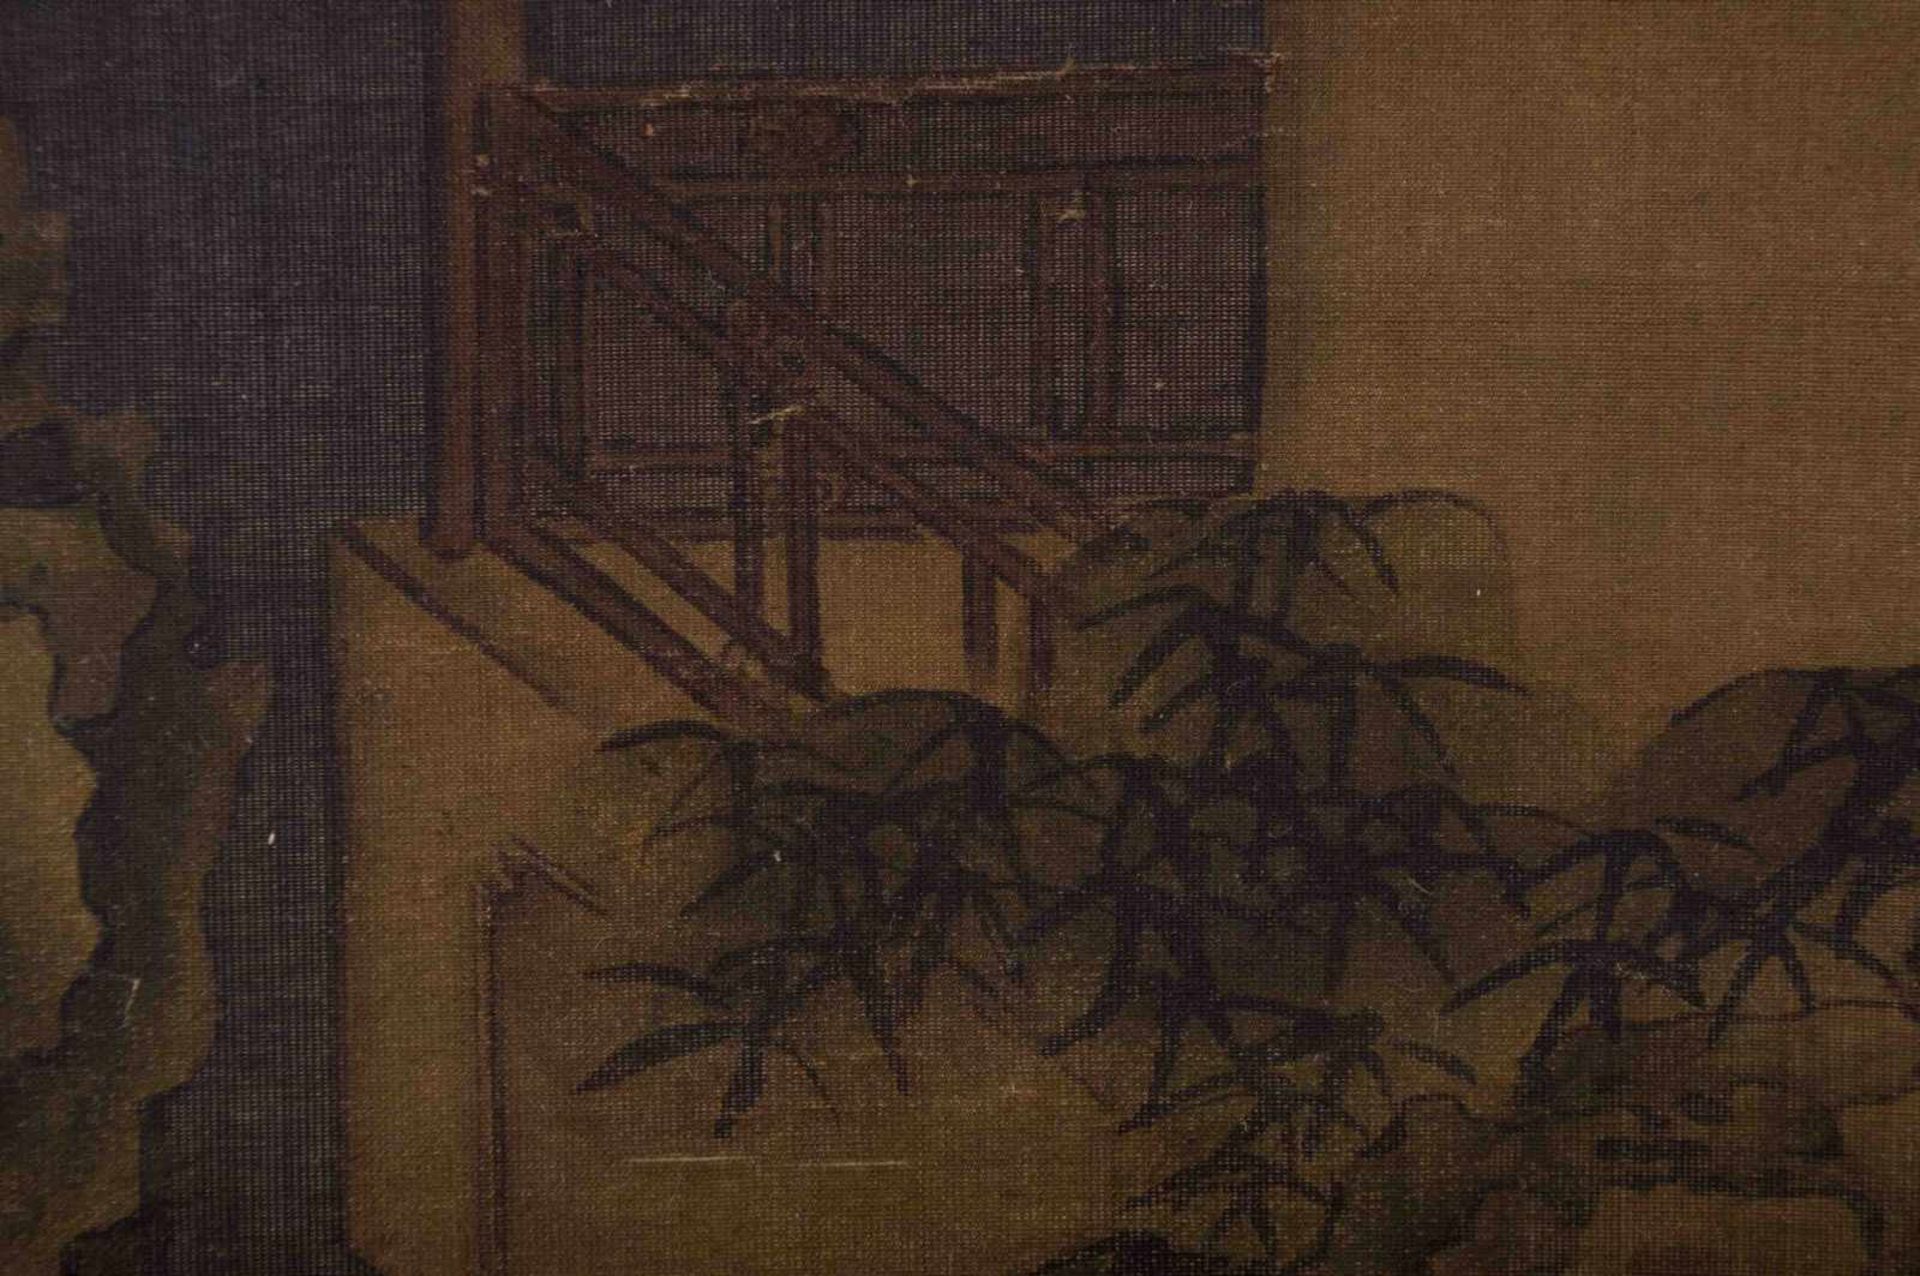 Rollbild China 18.Jhd. / Scrol painting, China 18th century Tuschmalerei auf Seide, rechts unten - Image 3 of 4